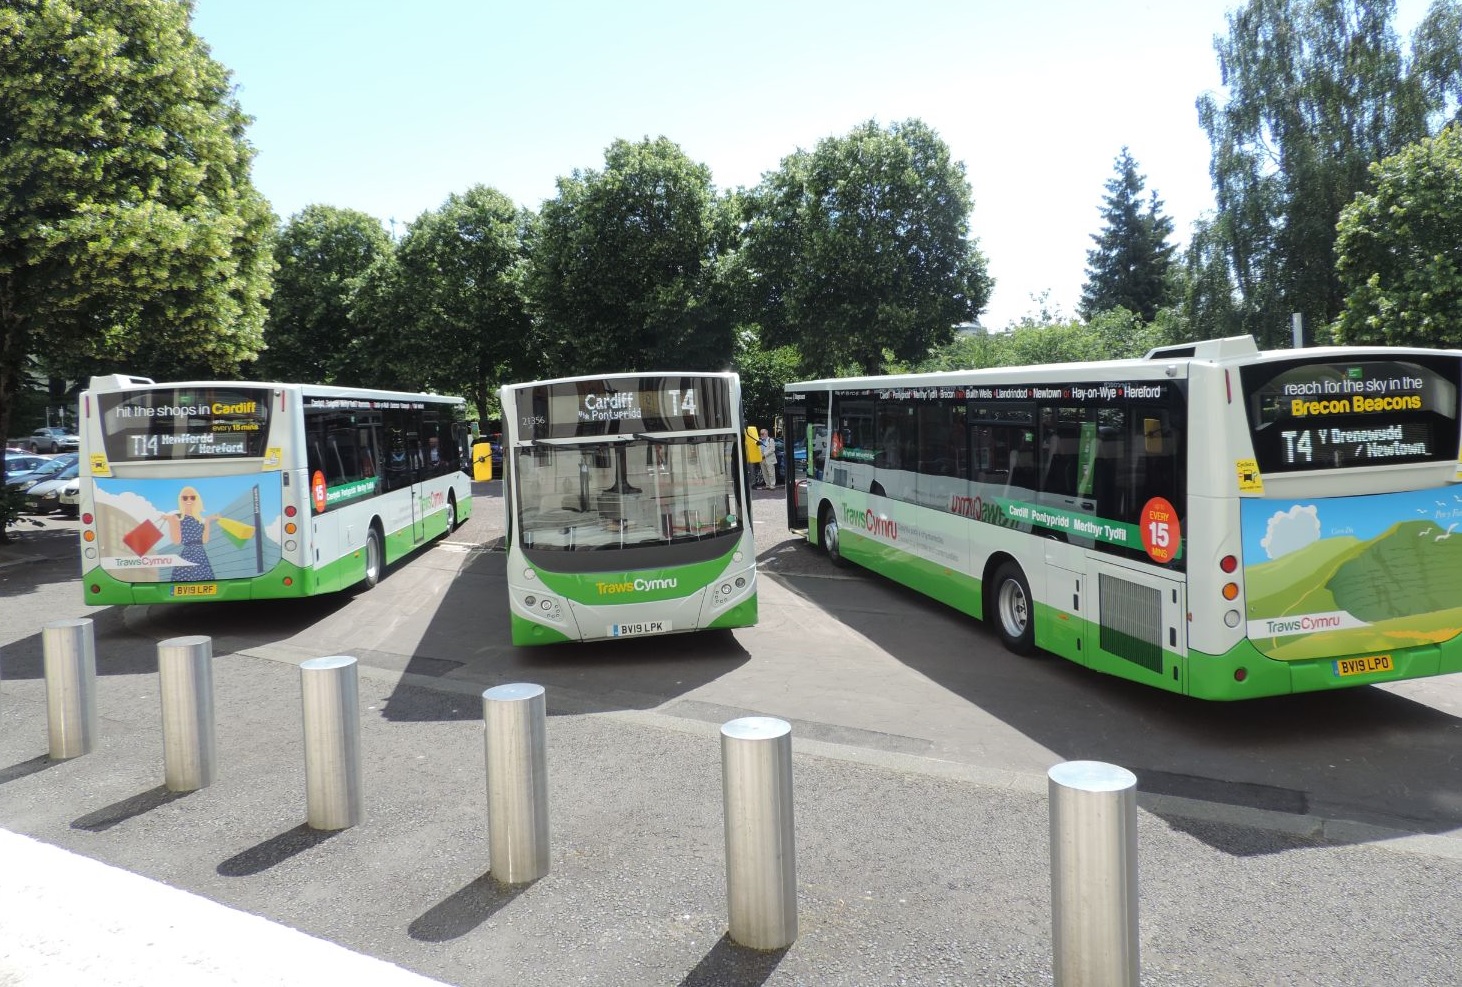 Wales zero emission bus shift to be led by TrawsCymru